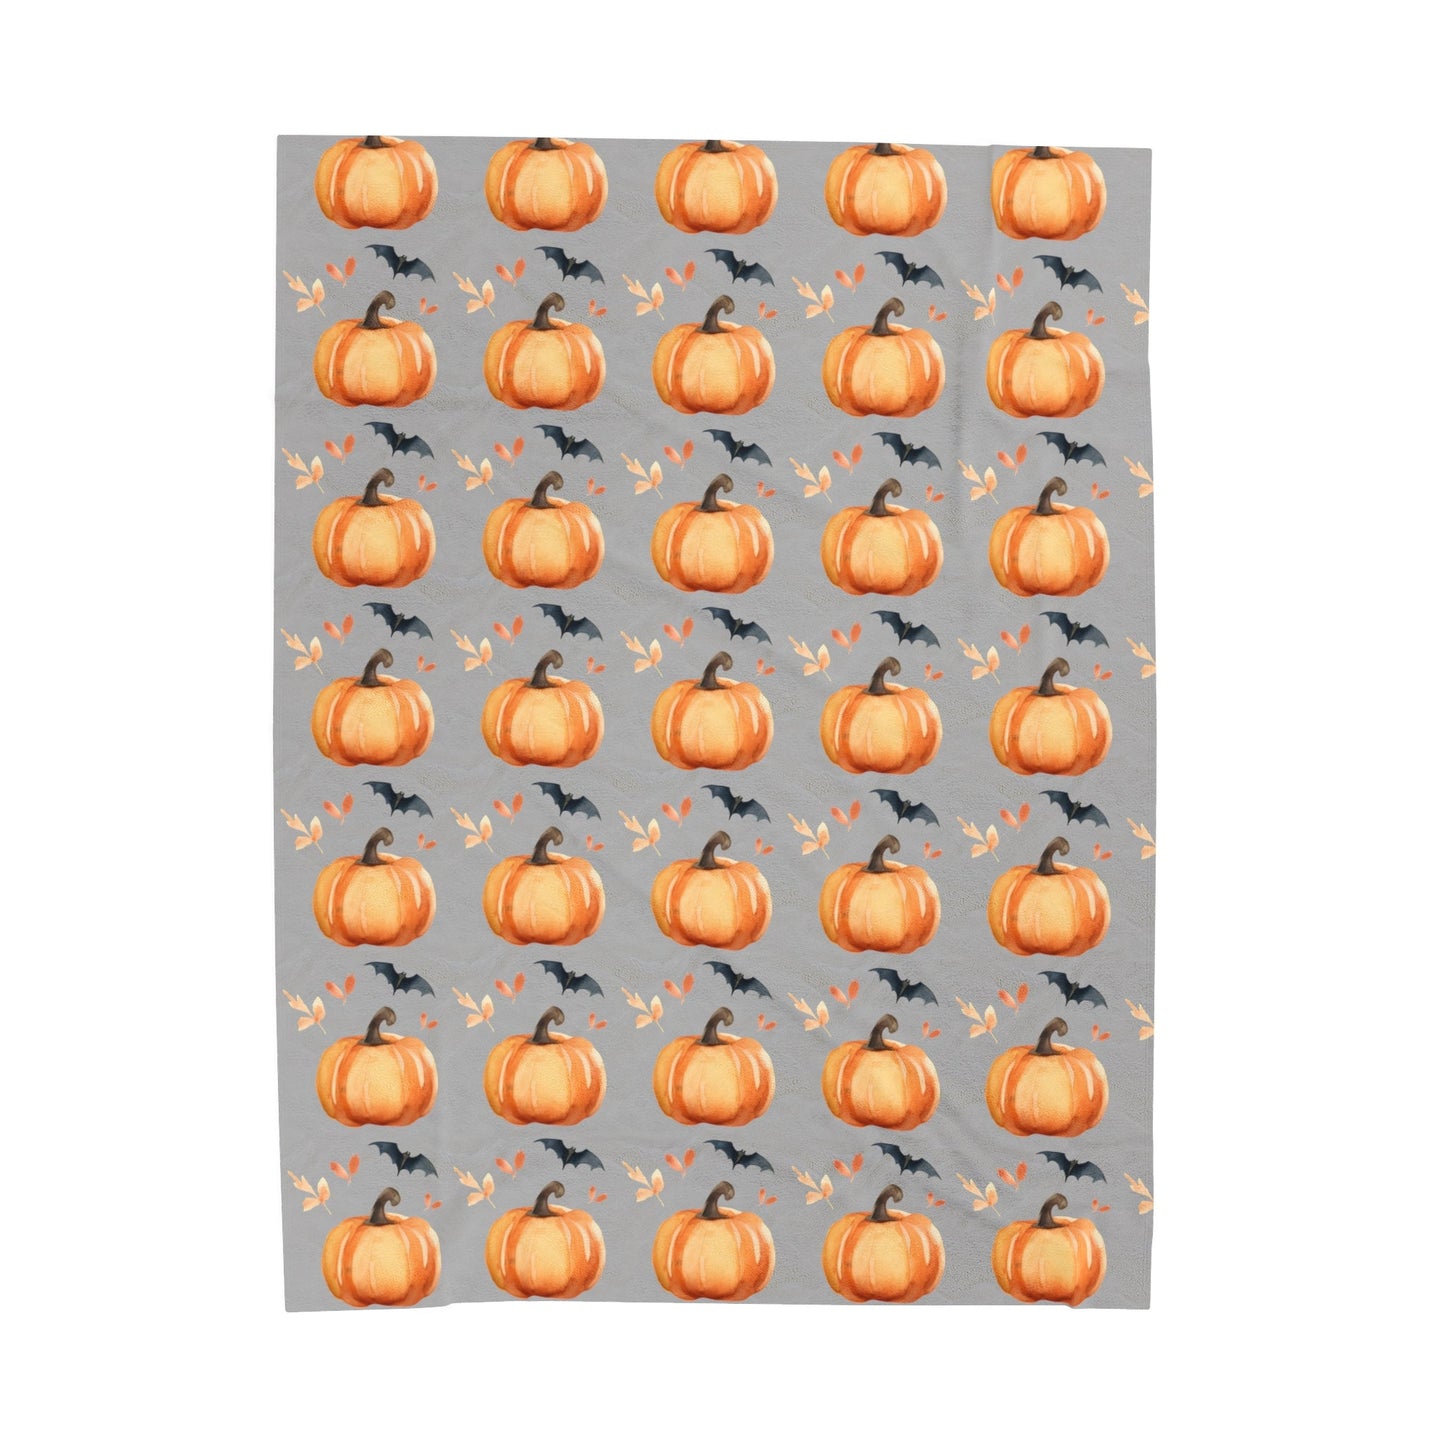 Pumpkins Leaves and Bats Throw BlanketAll Over PrintsVTZdesigns60" × 80"All Over PrintAOPautumn